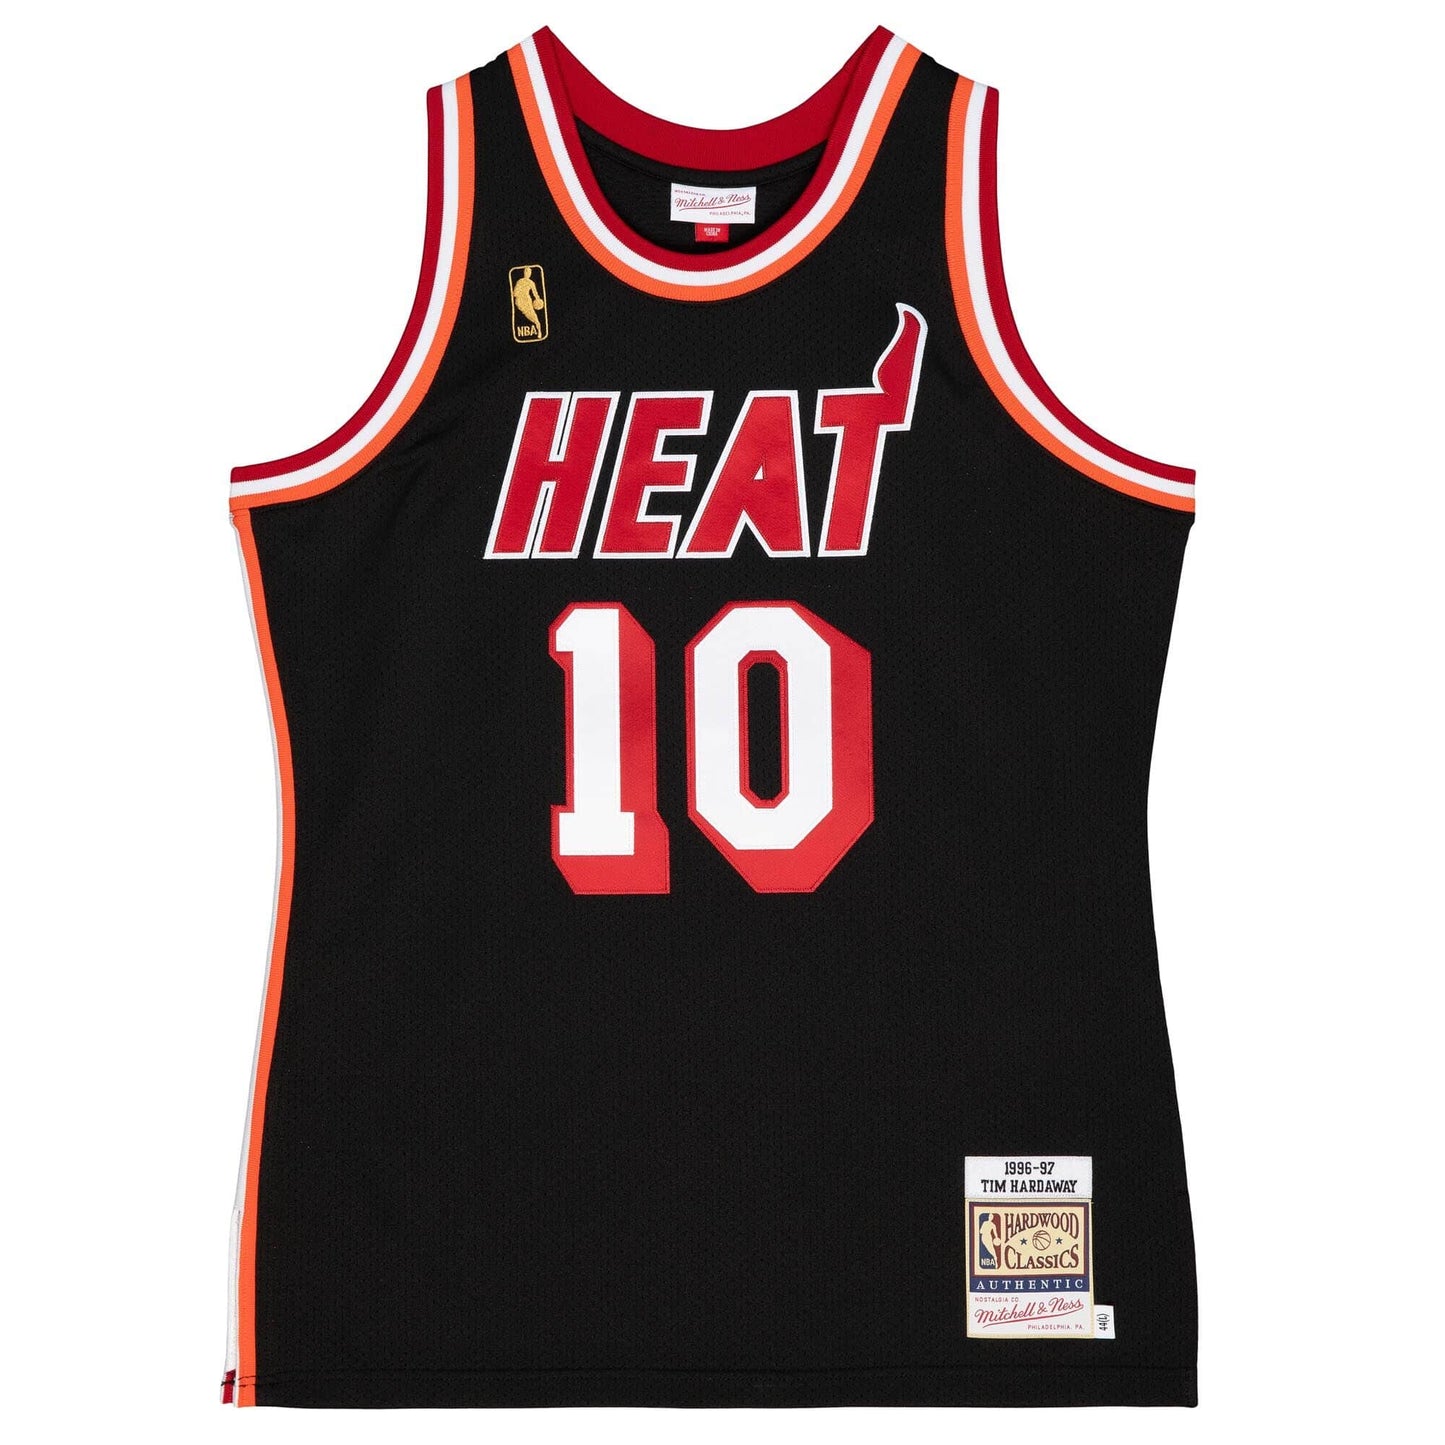 Authentic Tim Hardaway Miami Heat 1996-97 Jersey